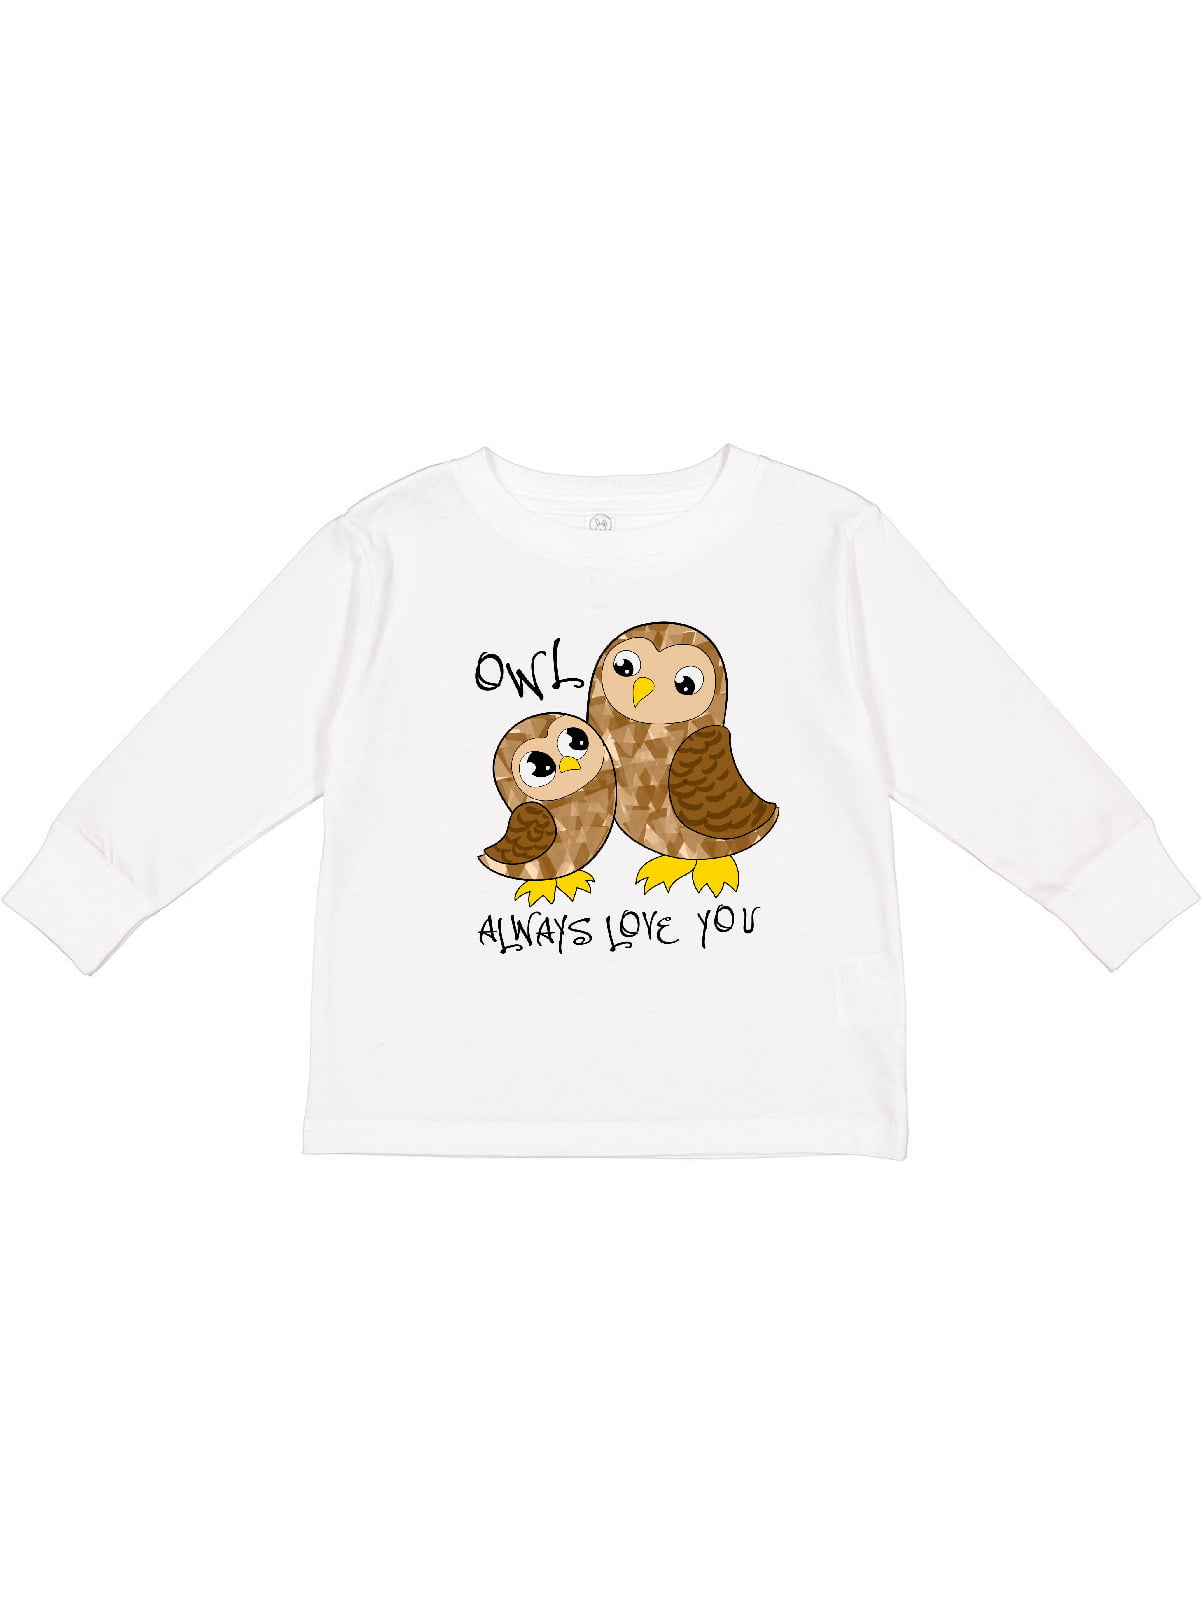 Toddler Baby Kid T-shirt Tee 6mo Thru 7t Owl On Branch Owl Always Love You.. 